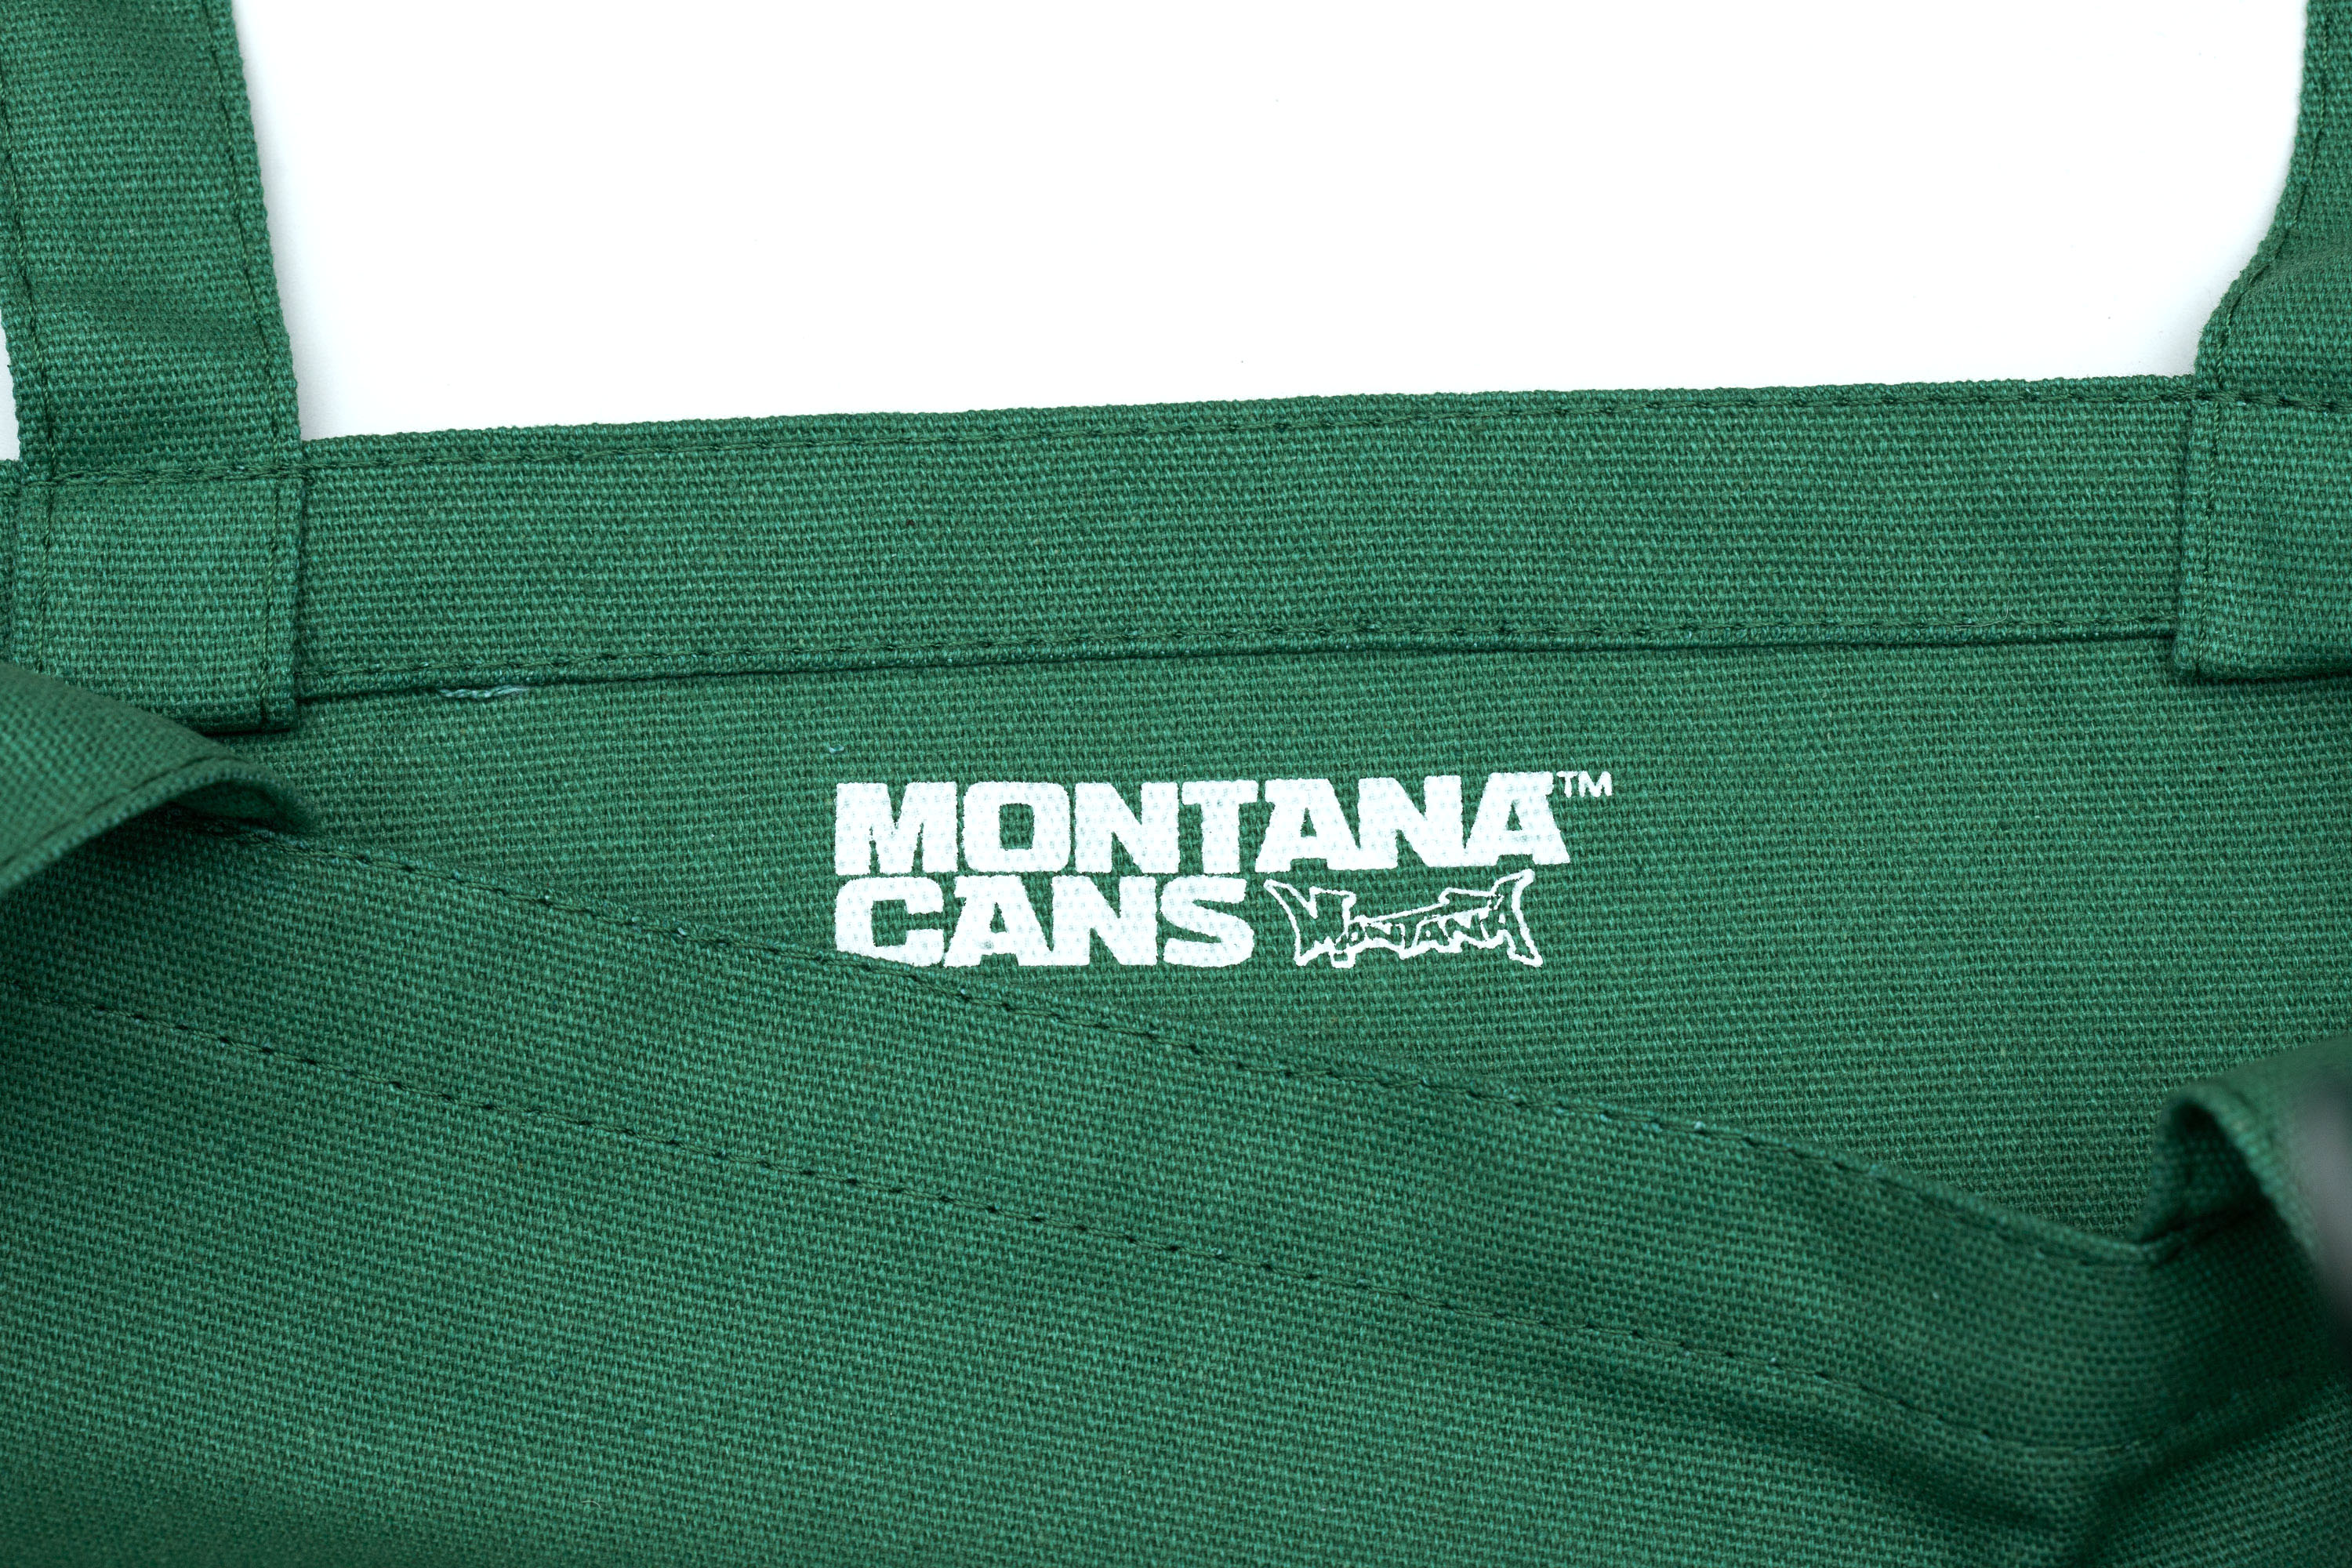 Montana Cotton Bag Donut Print - 6340 Copper Green